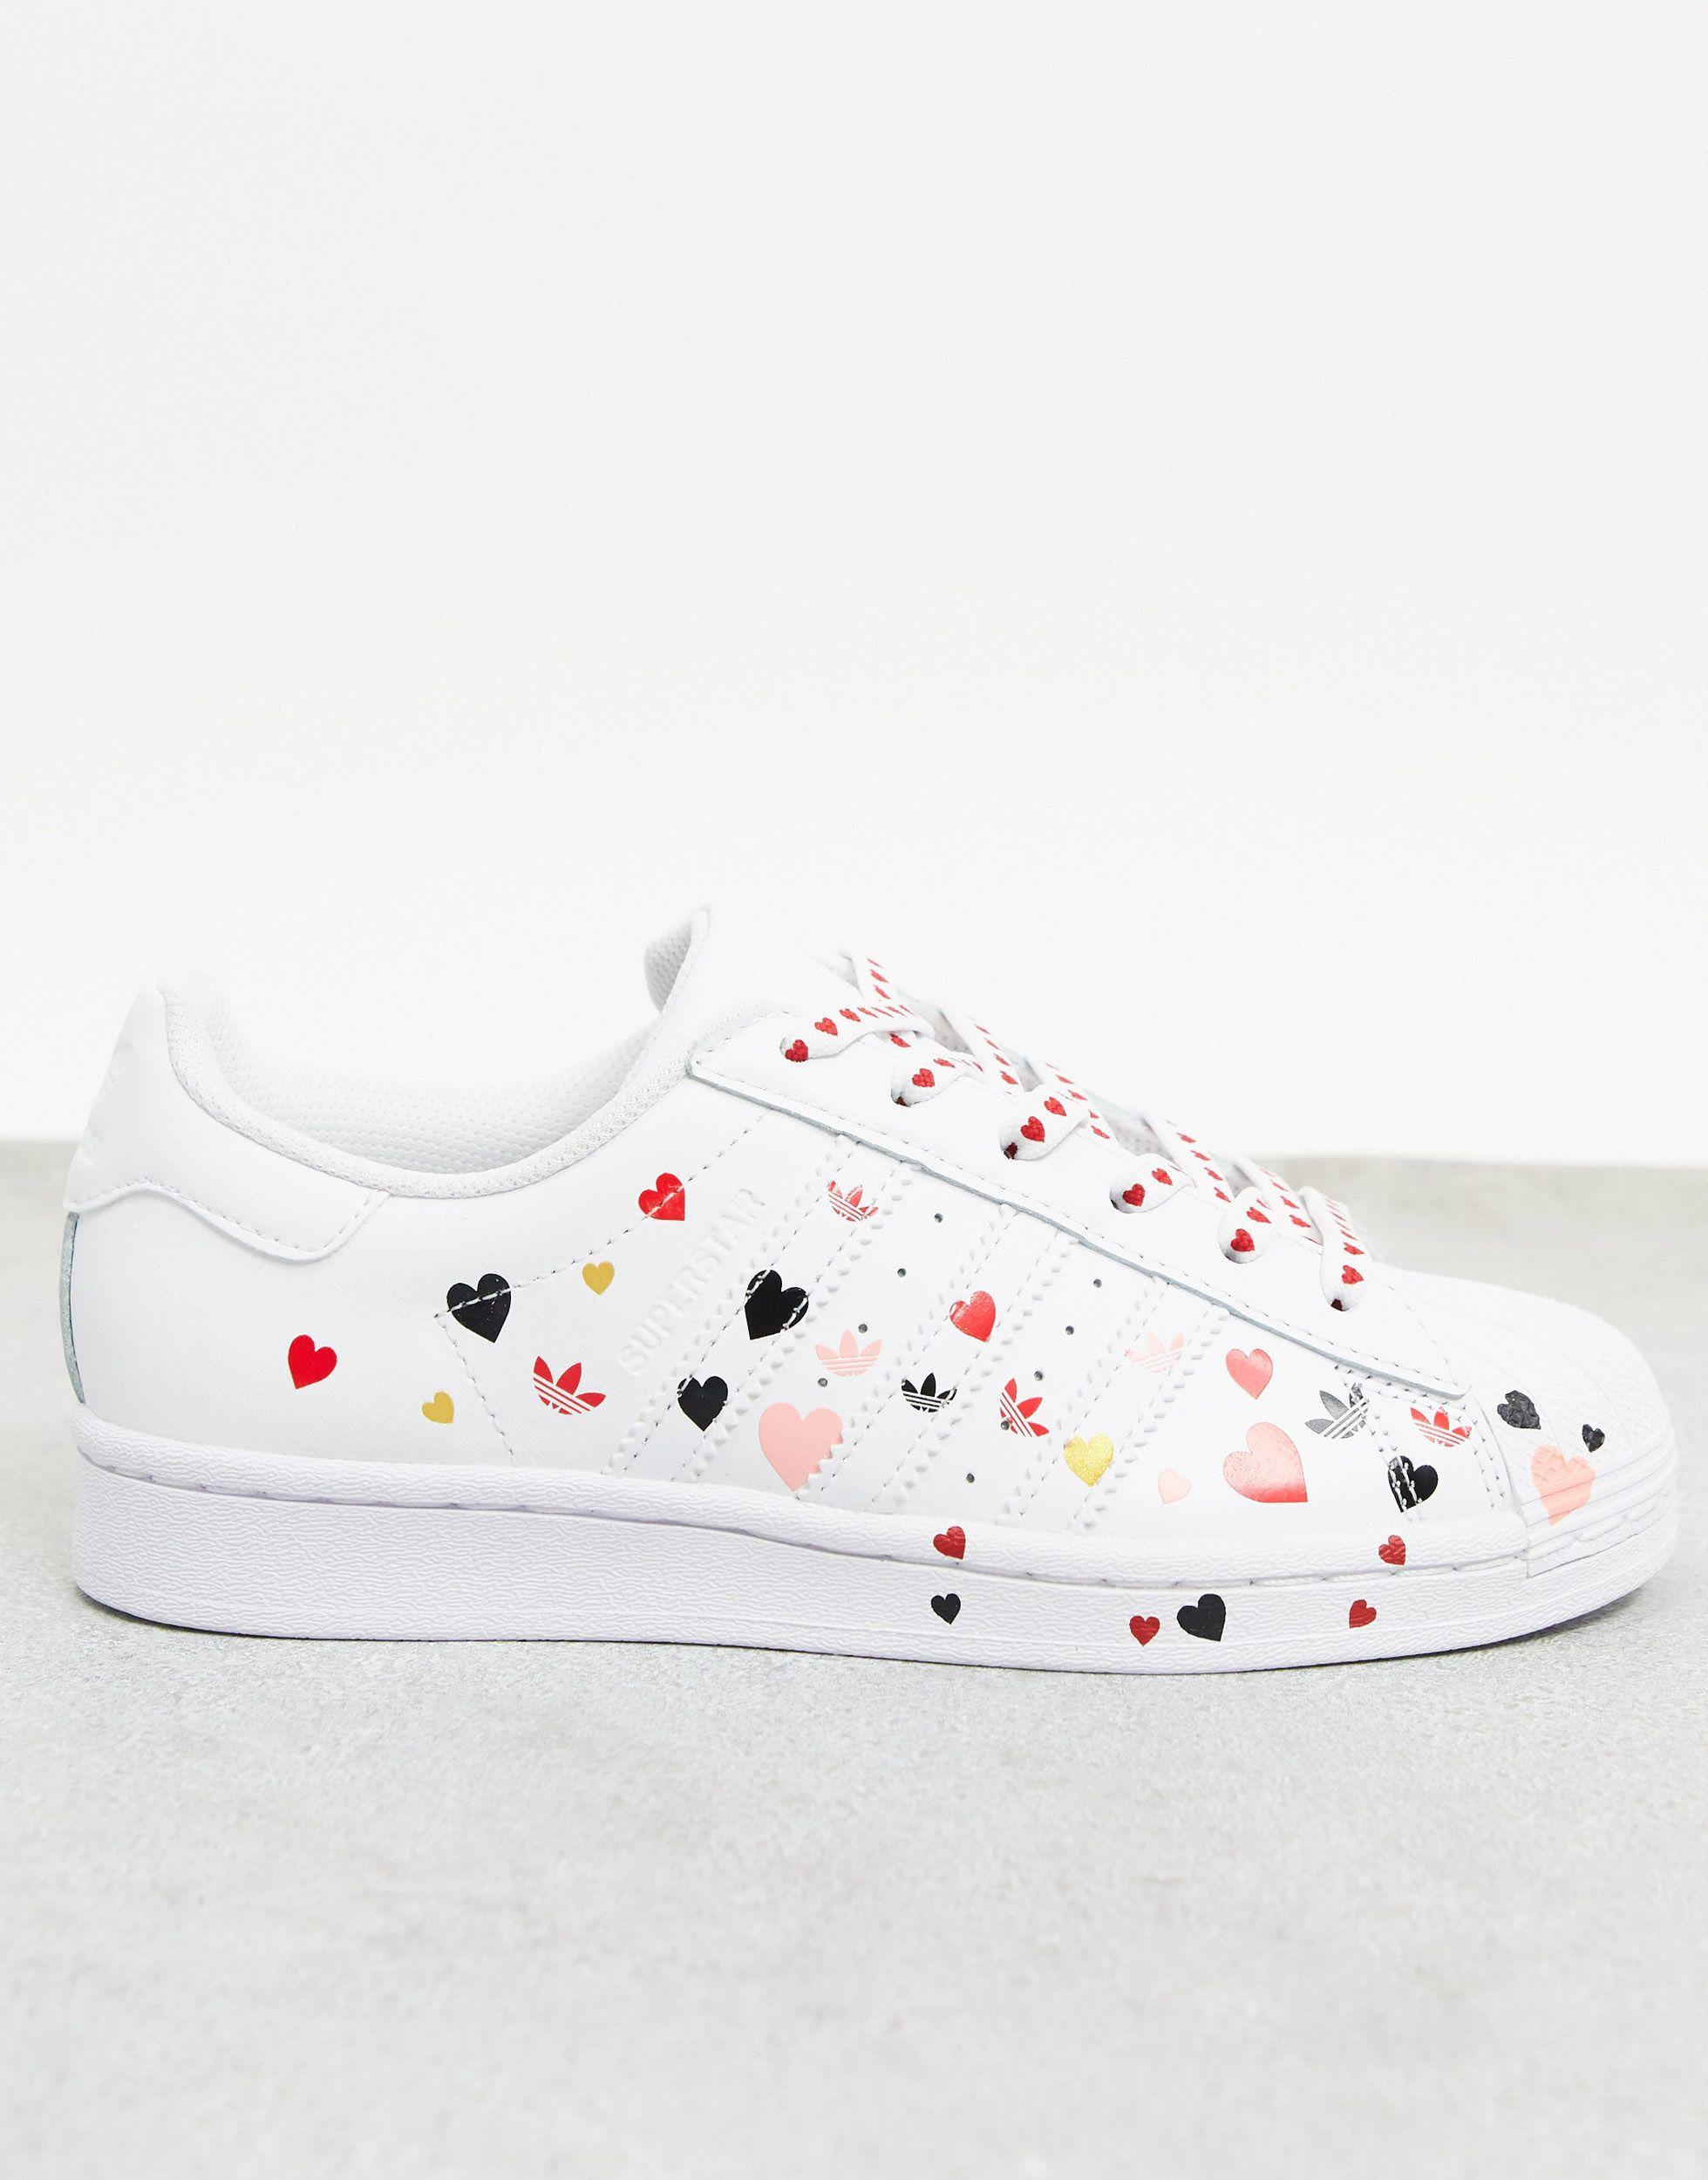 adidas Originals Rubber Heart Print Superstar Sneaker in White | Lyst